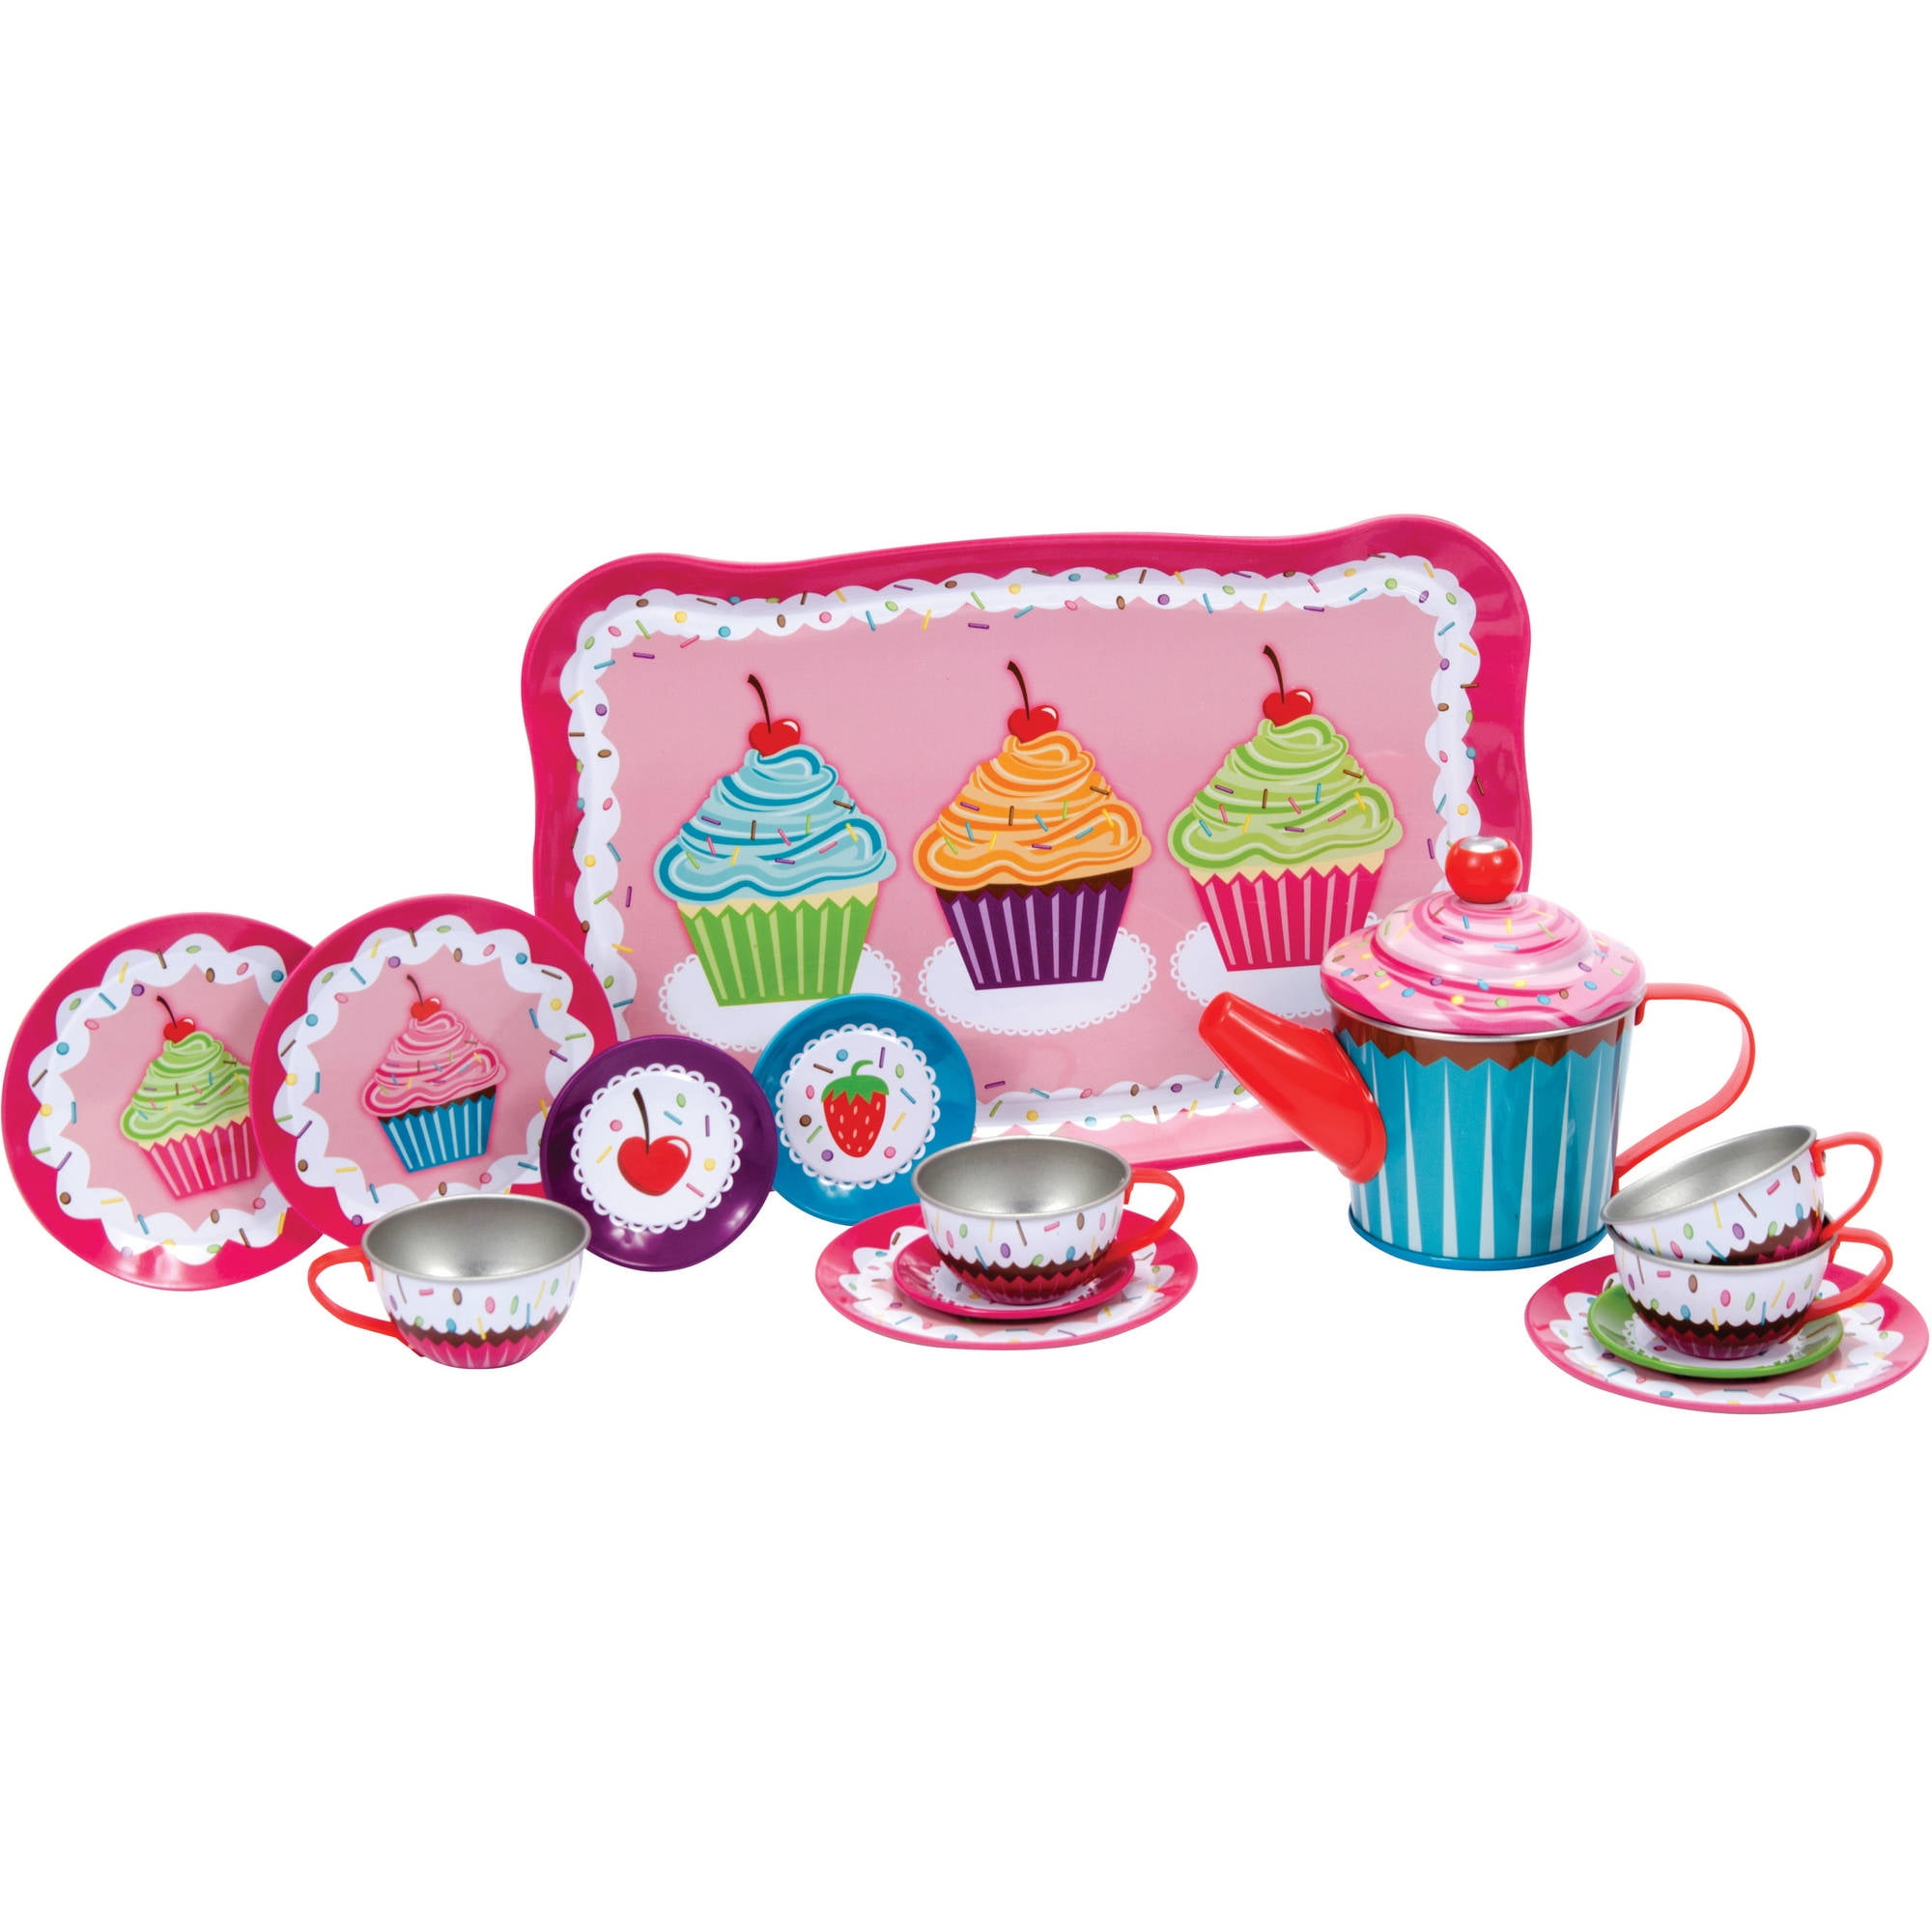 Schylling Cupcakes Tin Tea Set 696749257791 for sale online 